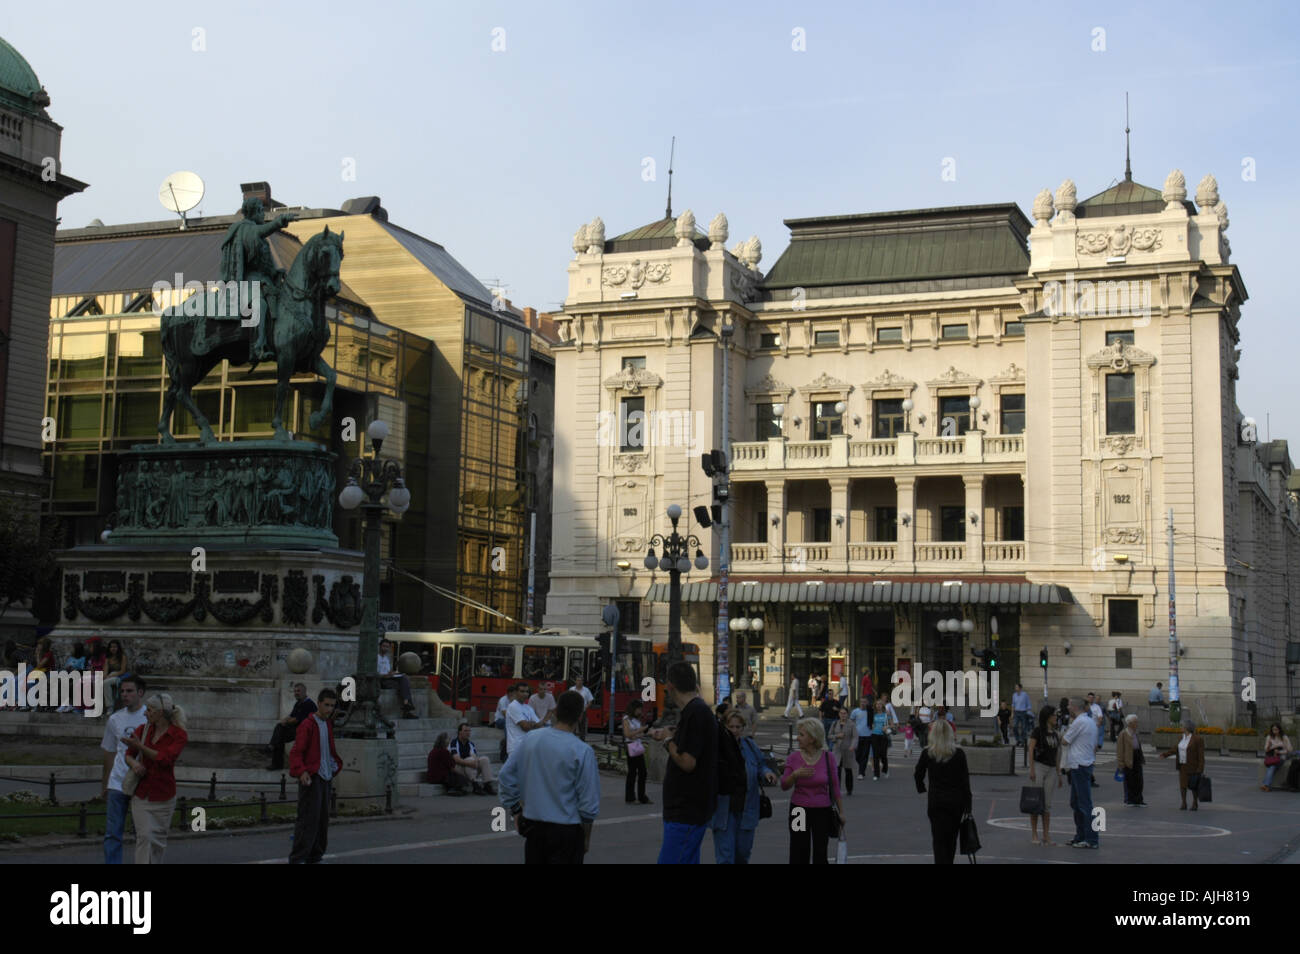 Beograd, city center, square Trg Republike Stock Photo